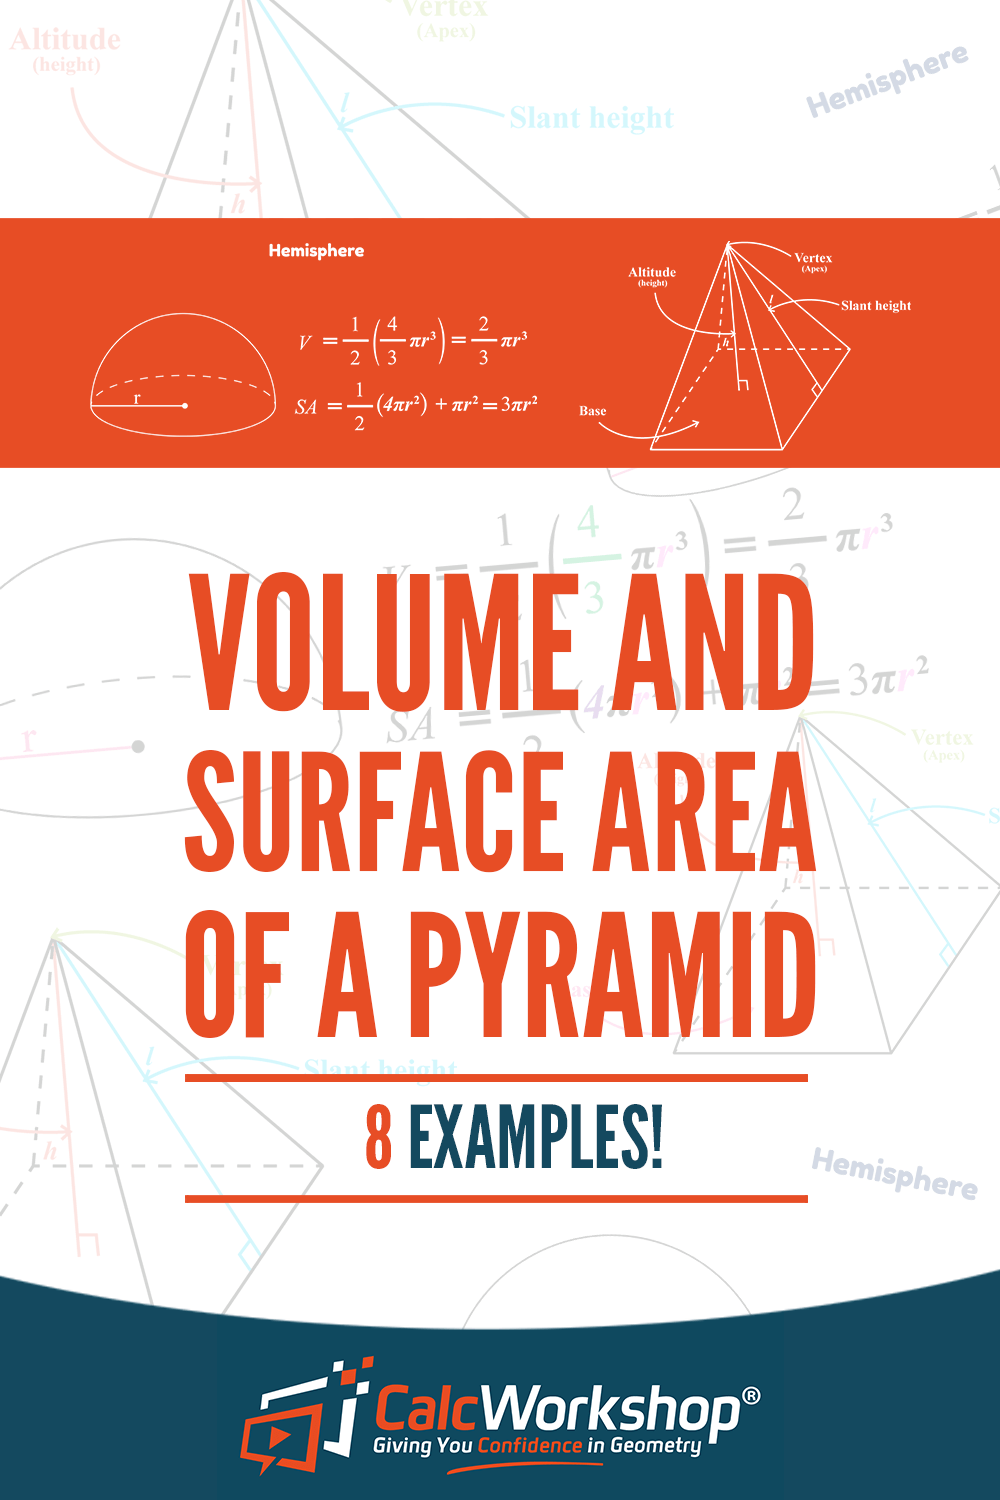 volume surface area pyramid pinterest calcworkshop